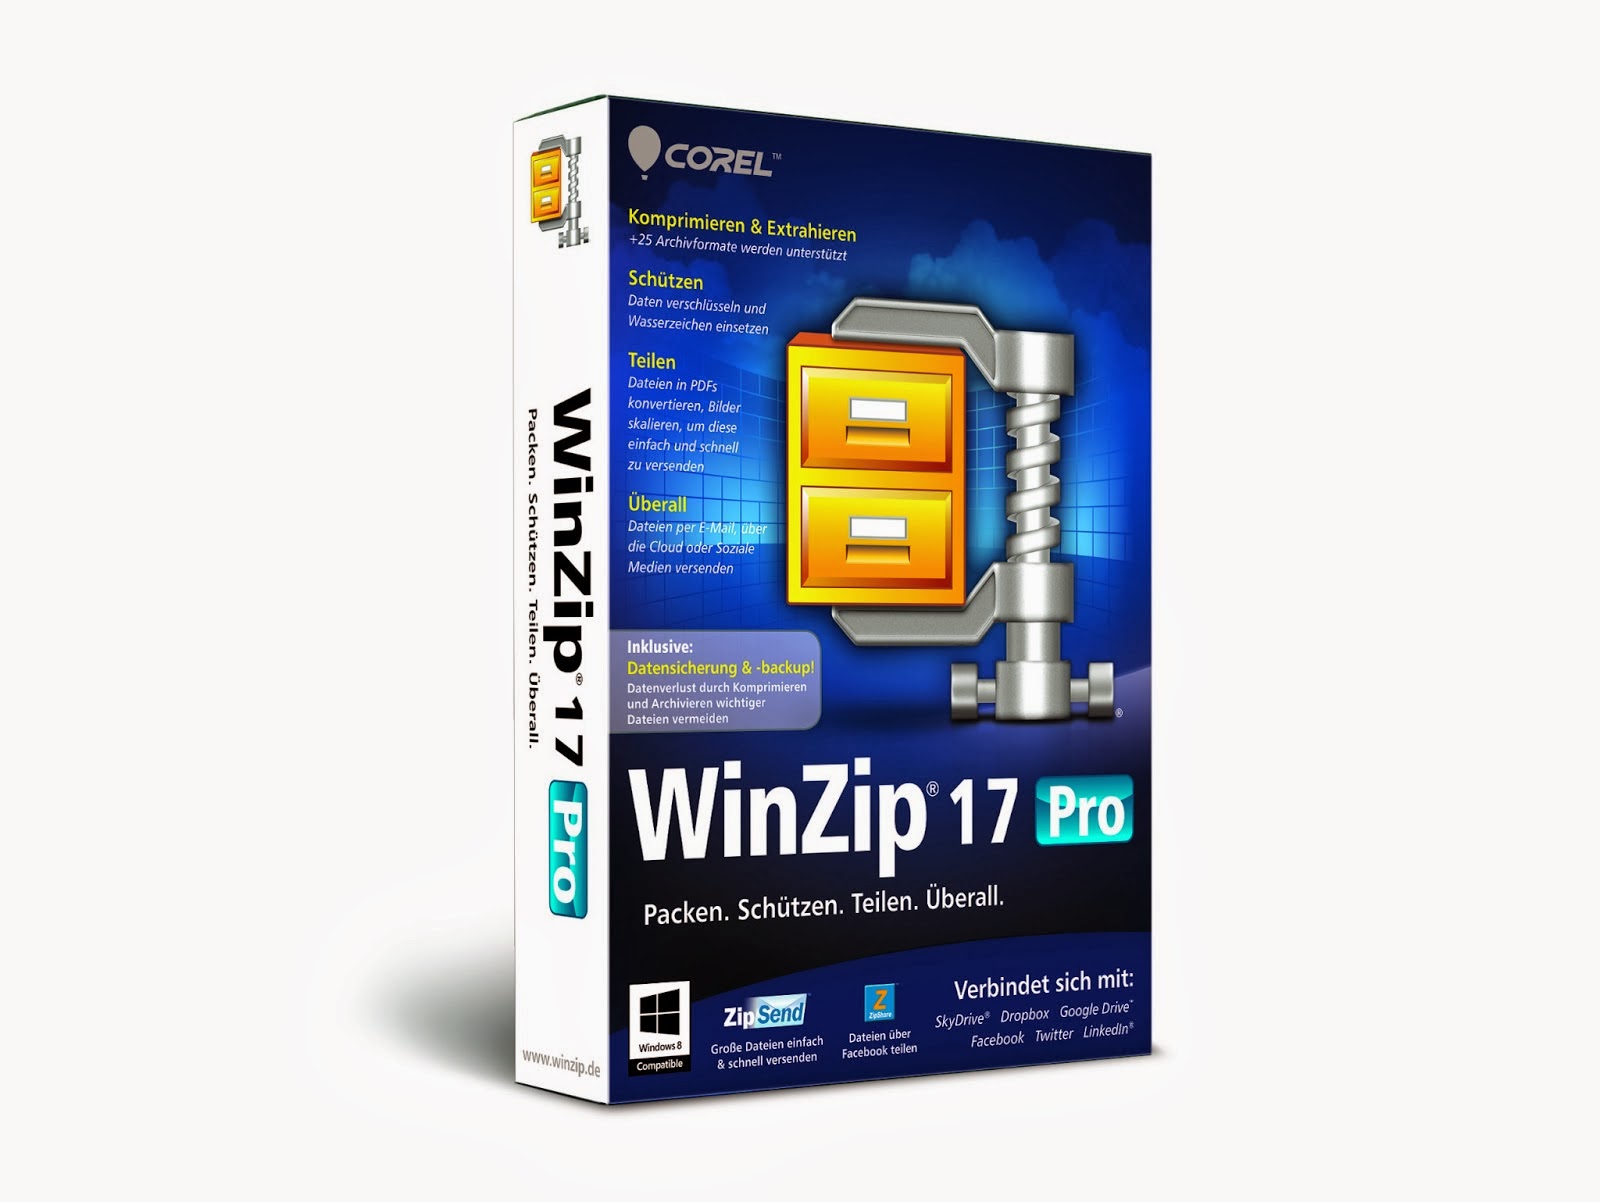 winzip 64 bit free download with crack